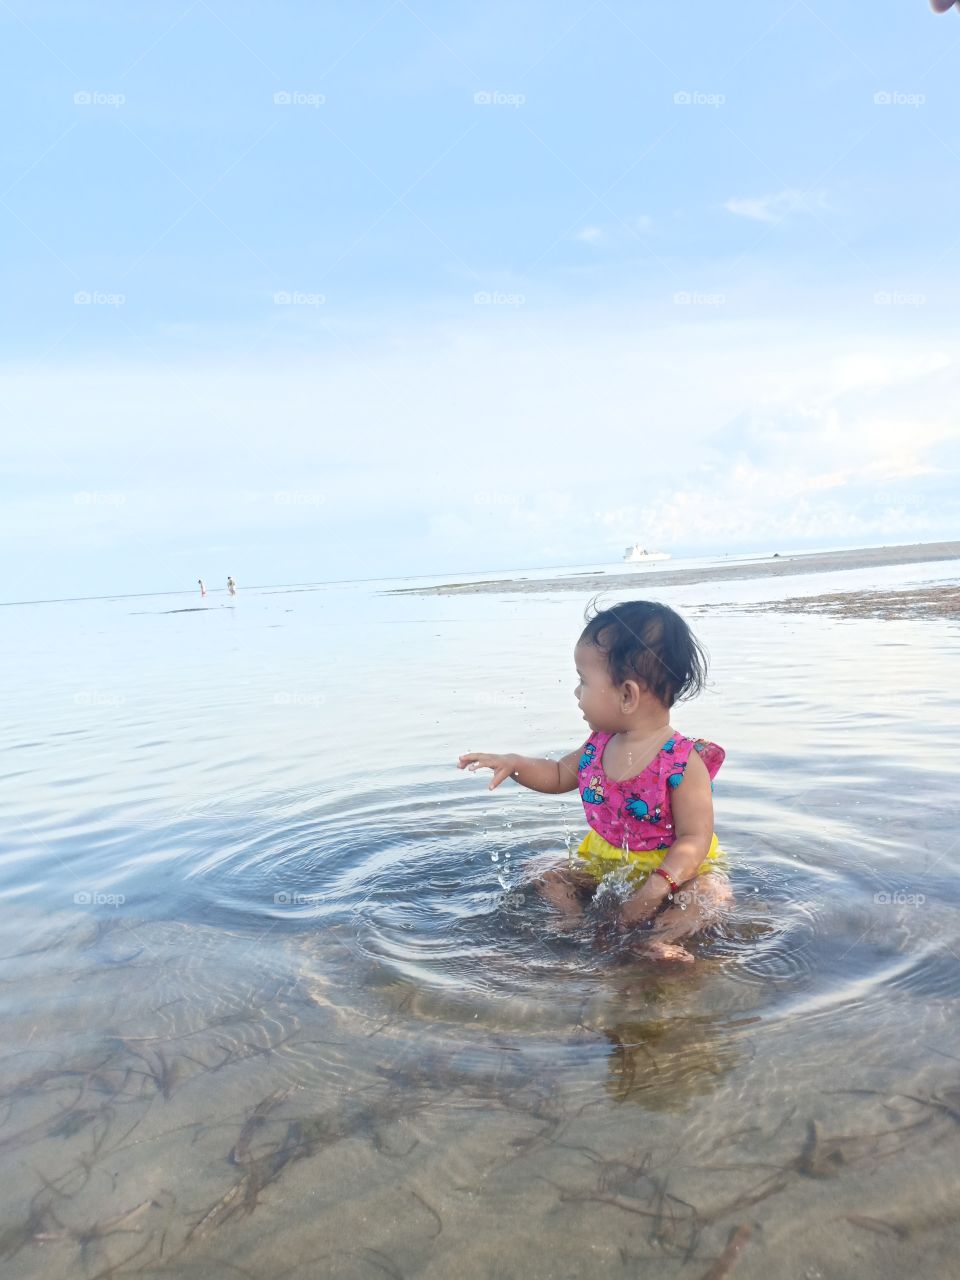 happy life in the world!
#philippines #beach #ocean #adventure #life #beauty #paradise